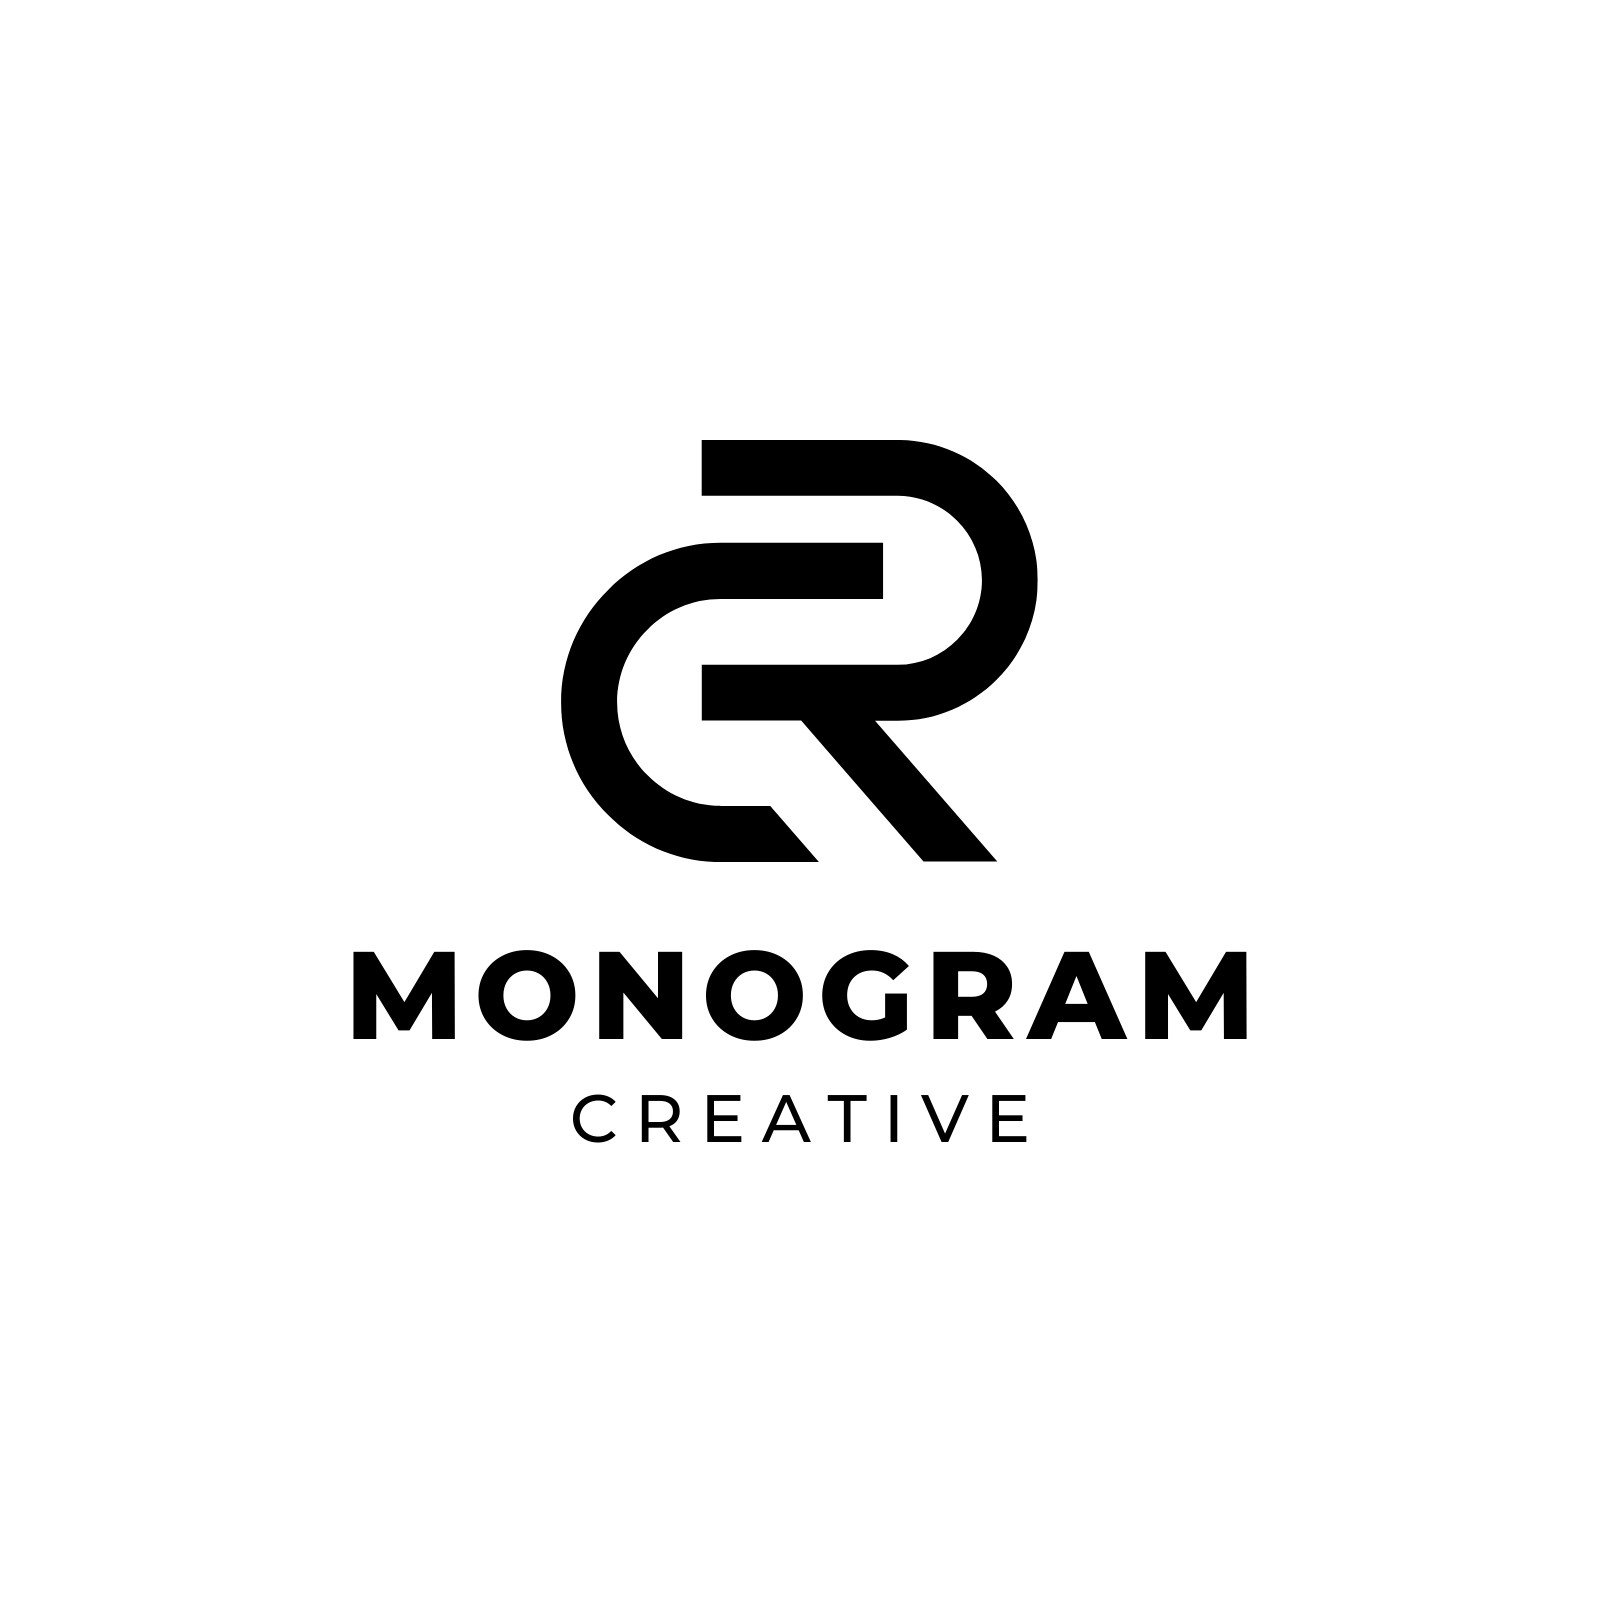 Letter M M logo design. creative minimal monochrome monogram